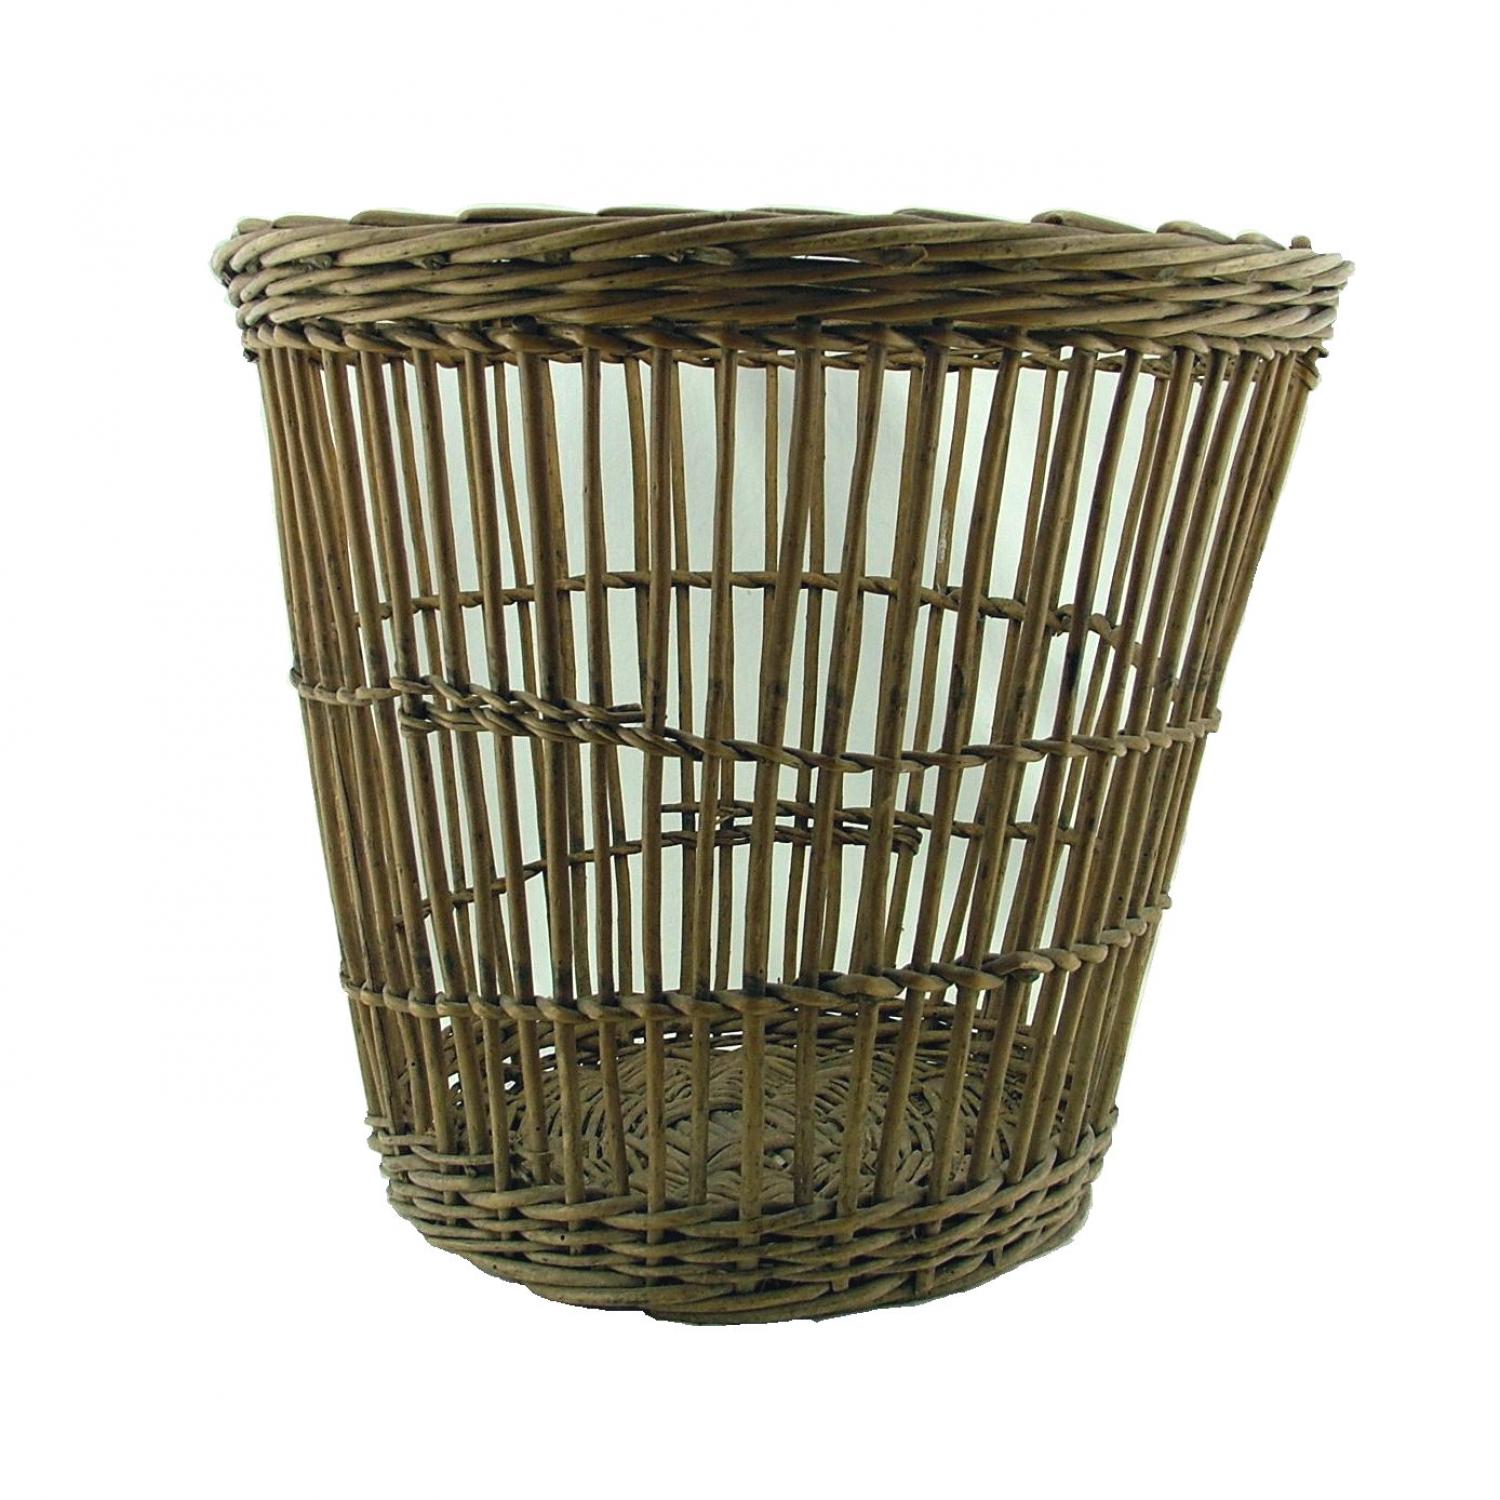 Air Ministry pattern waste paper basket